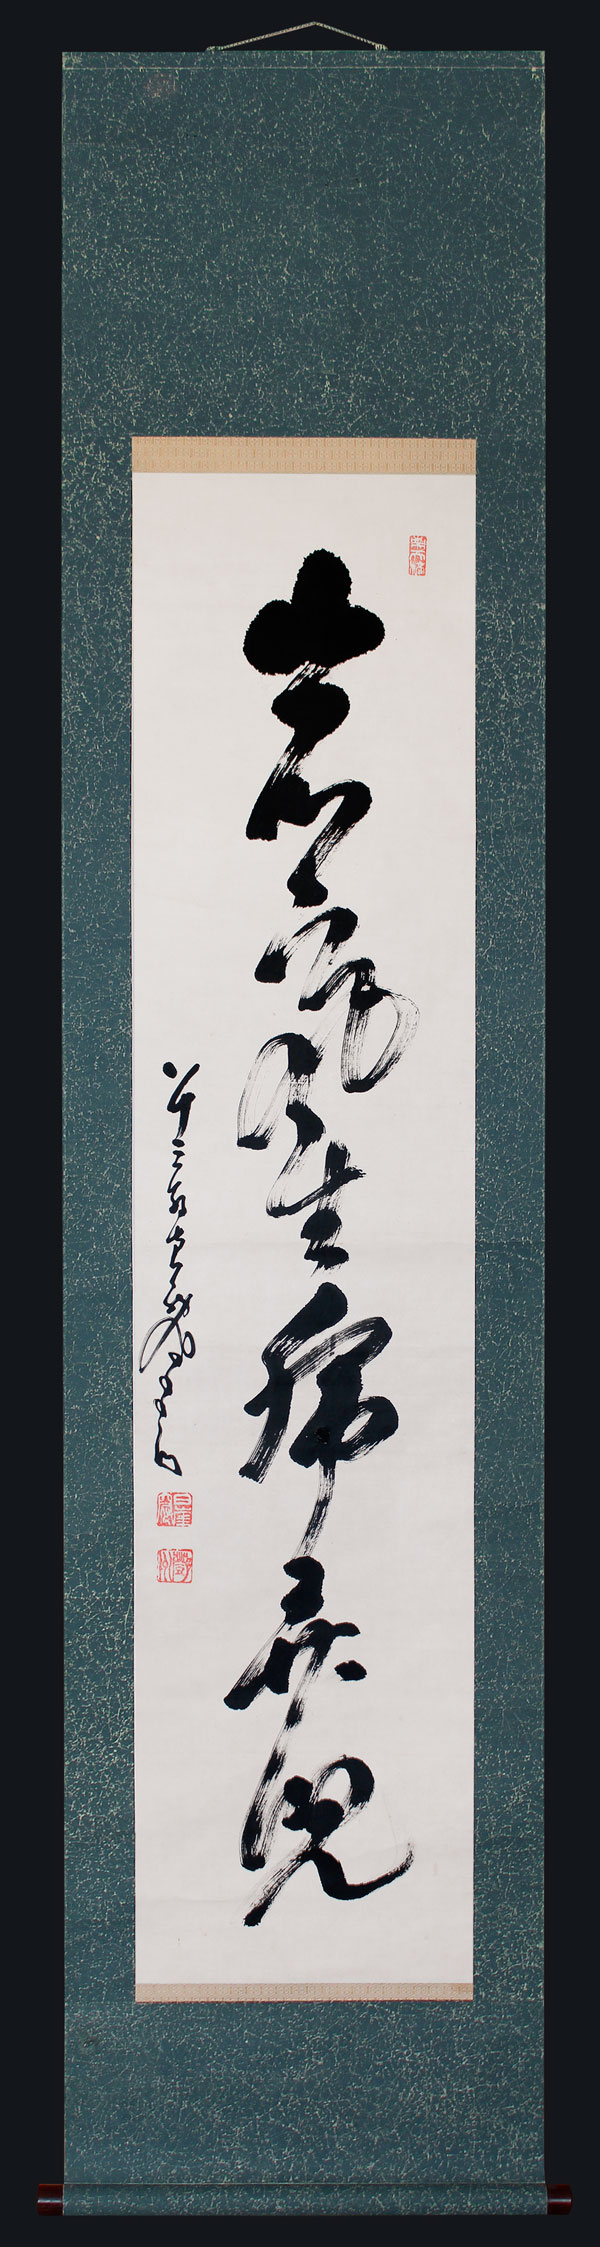 Zen-Textrolle-Kakemono-Japan-A